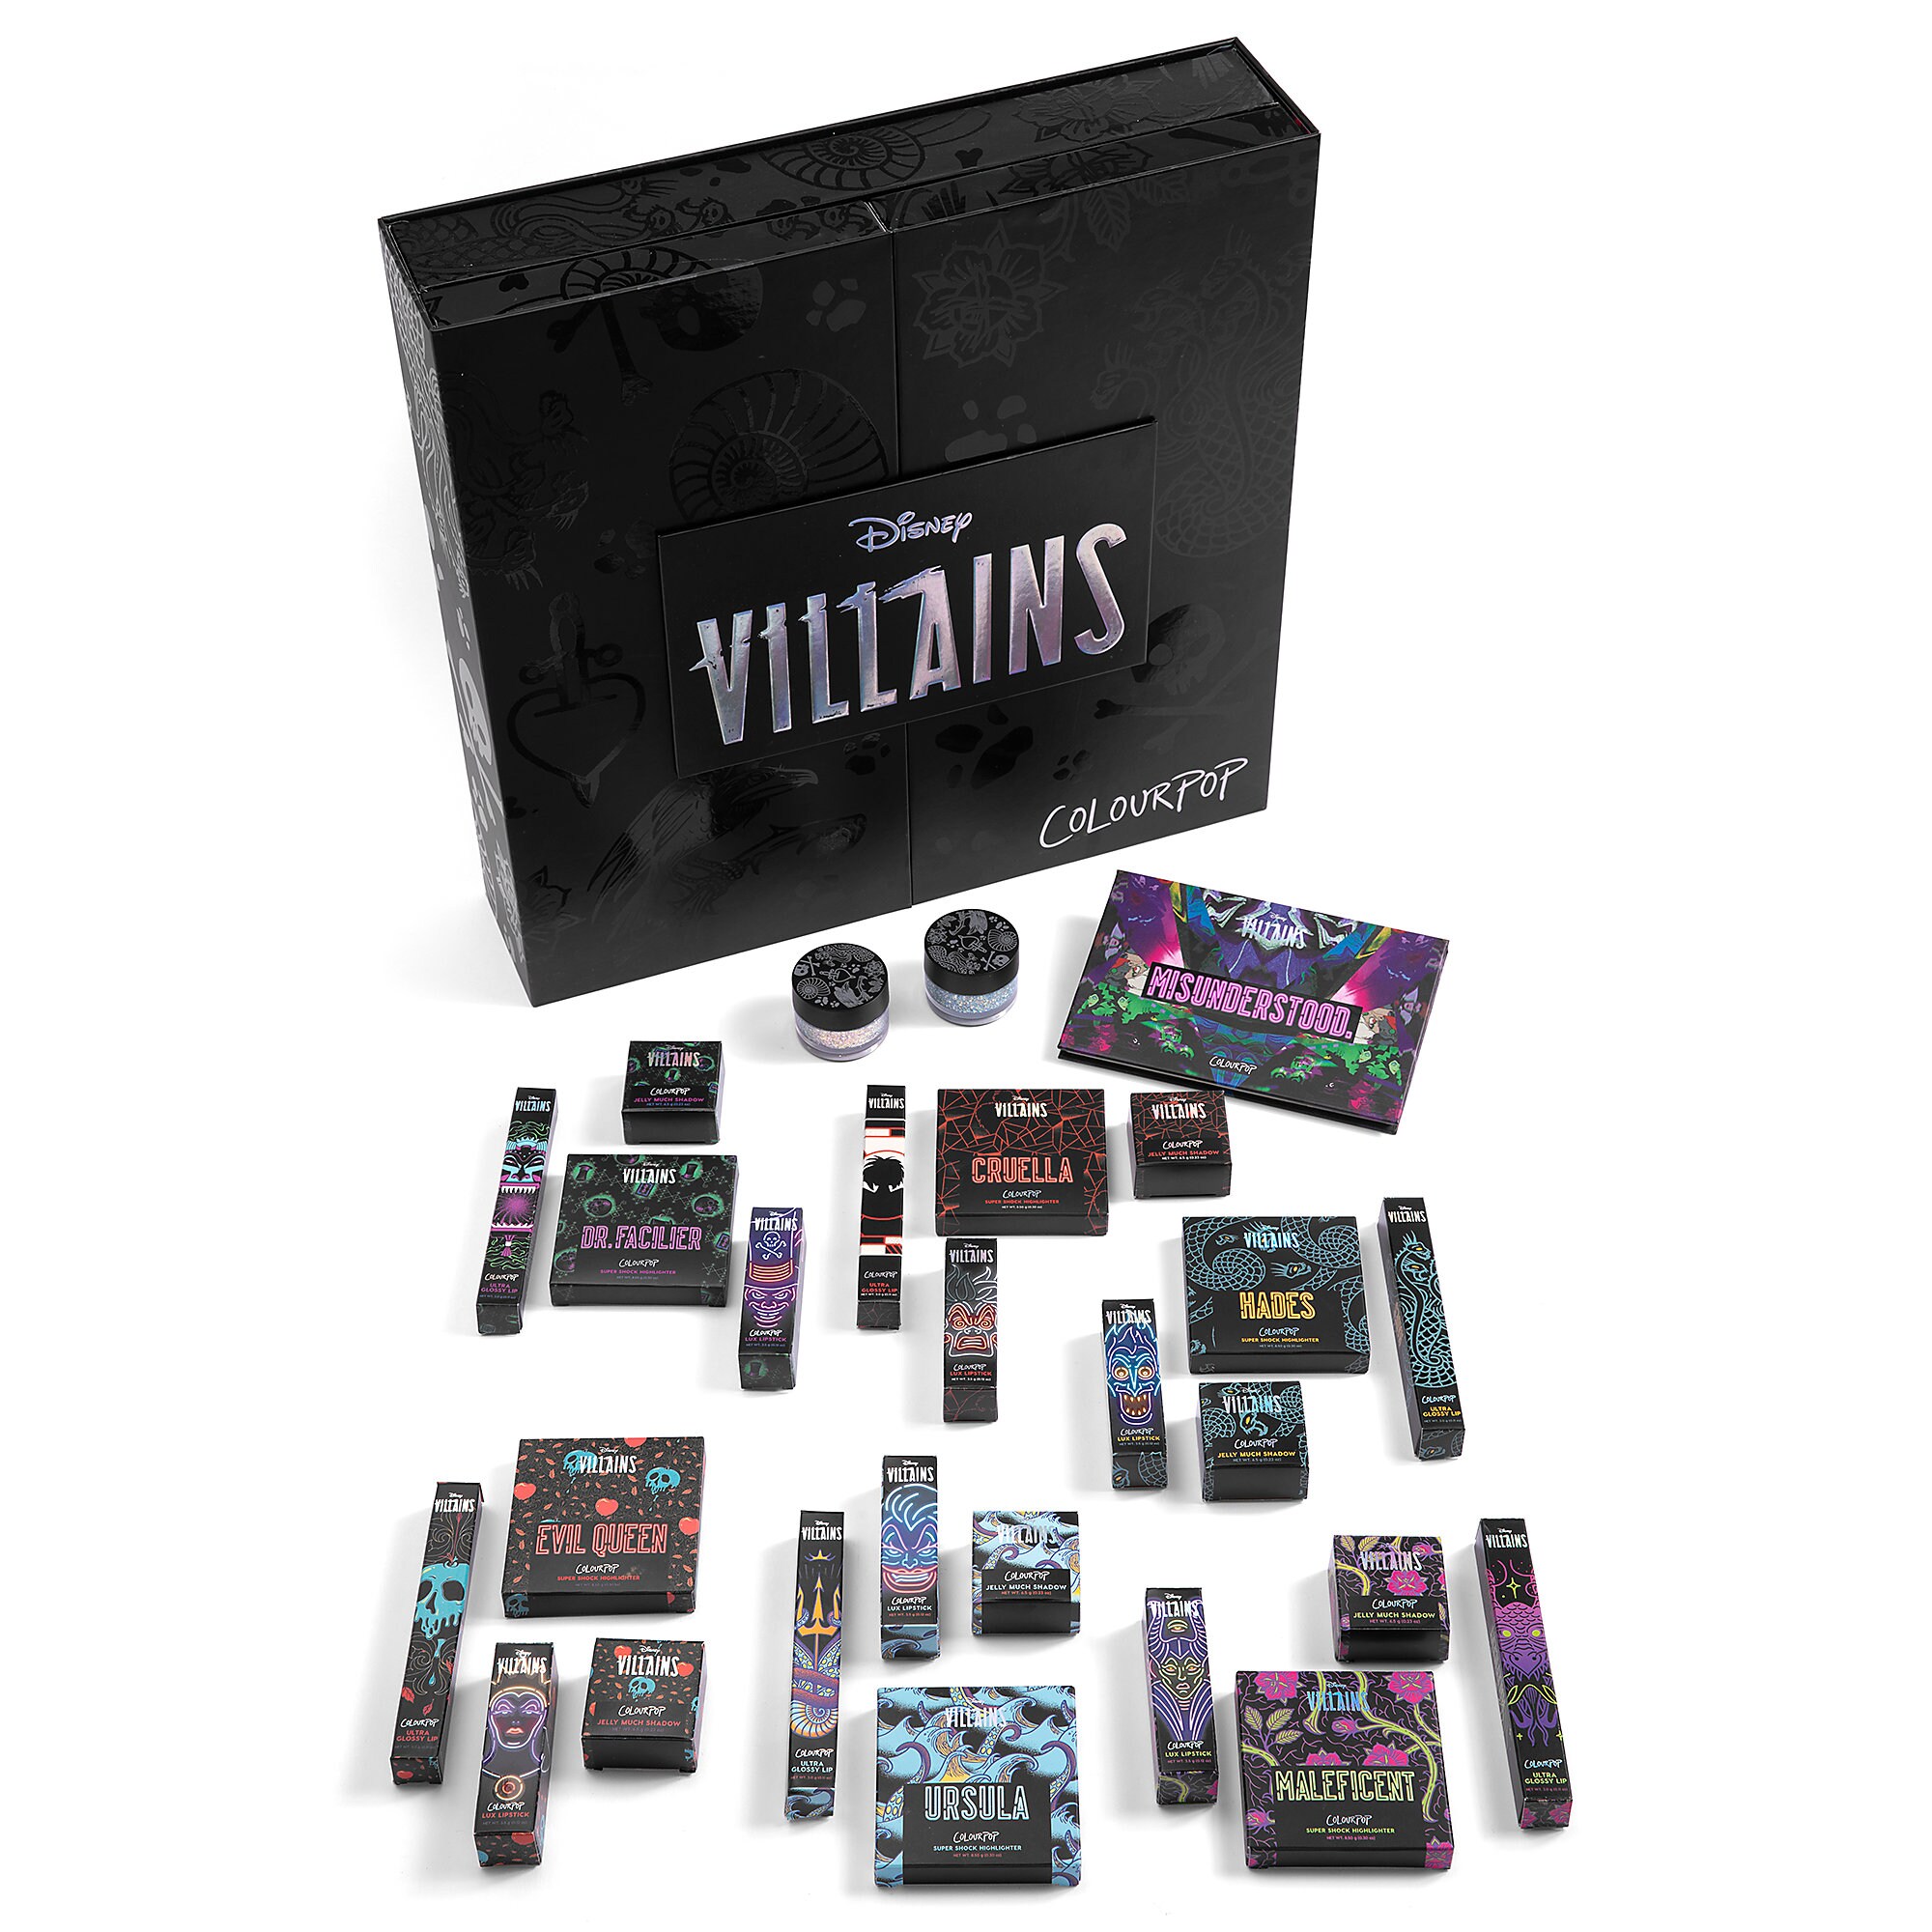 Disney Villains Collection Box by ColourPop